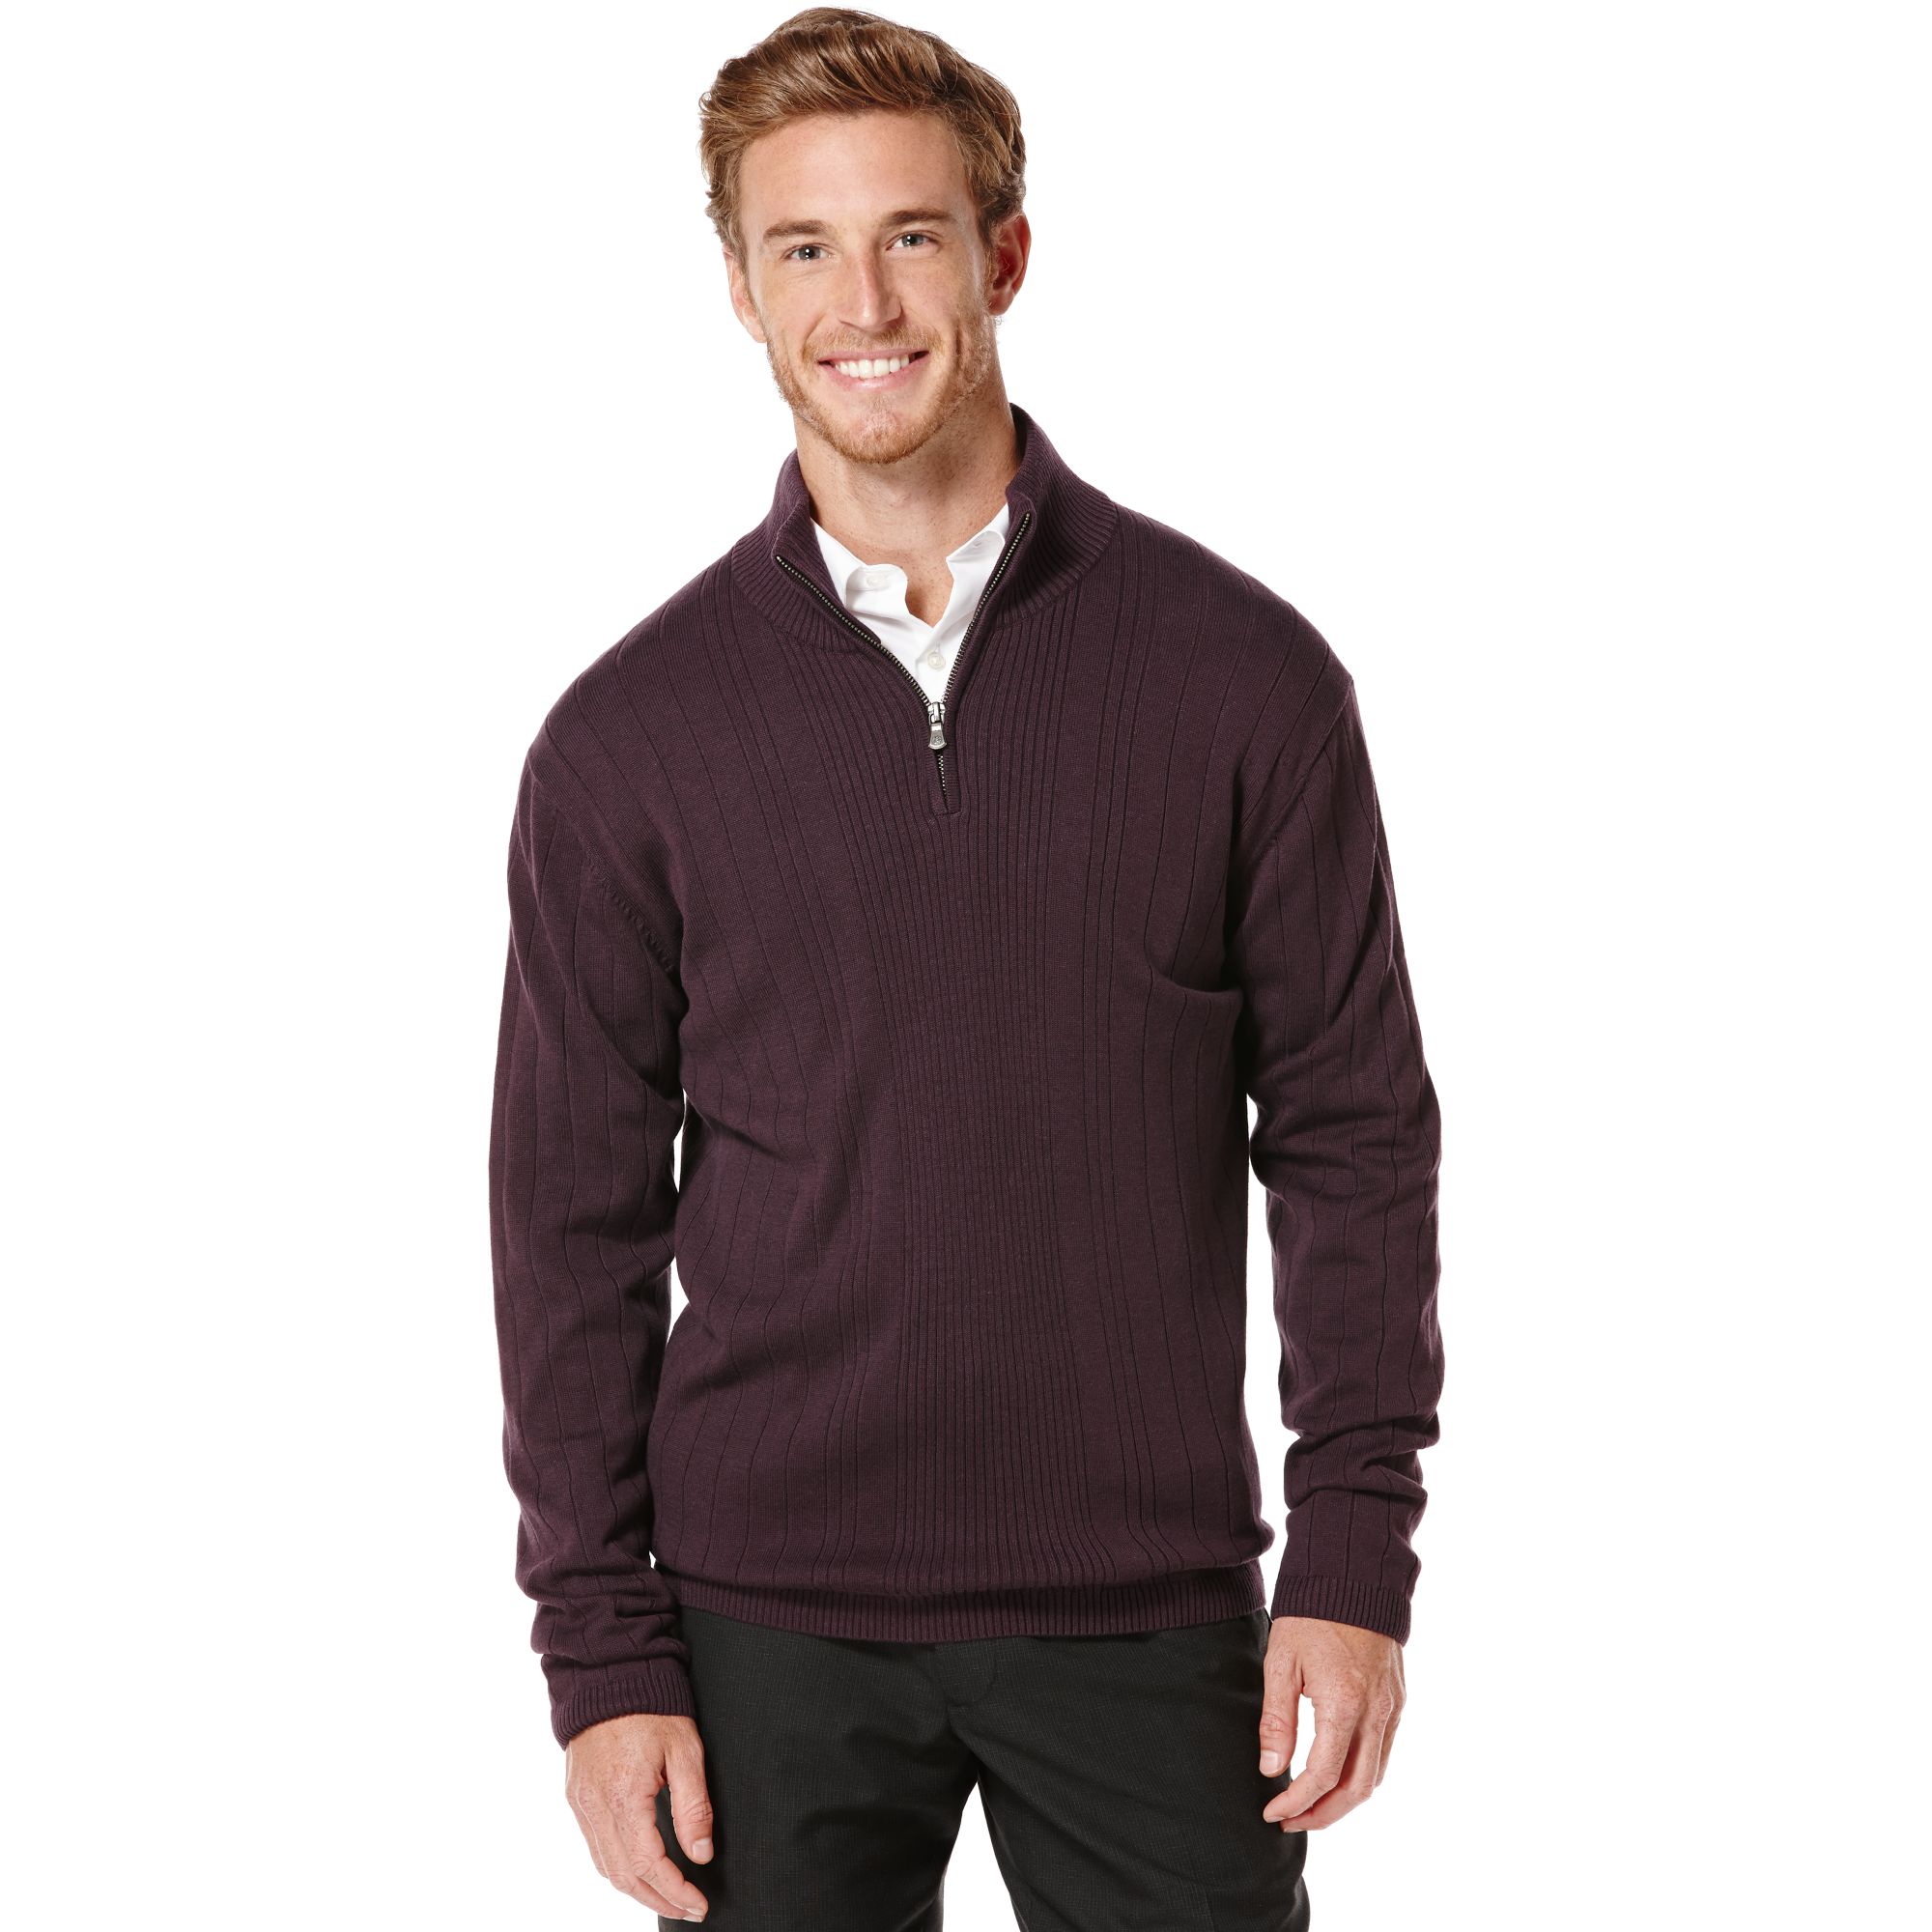 Lyst - Perry Ellis Quarter Zip Sweater in Purple for Men